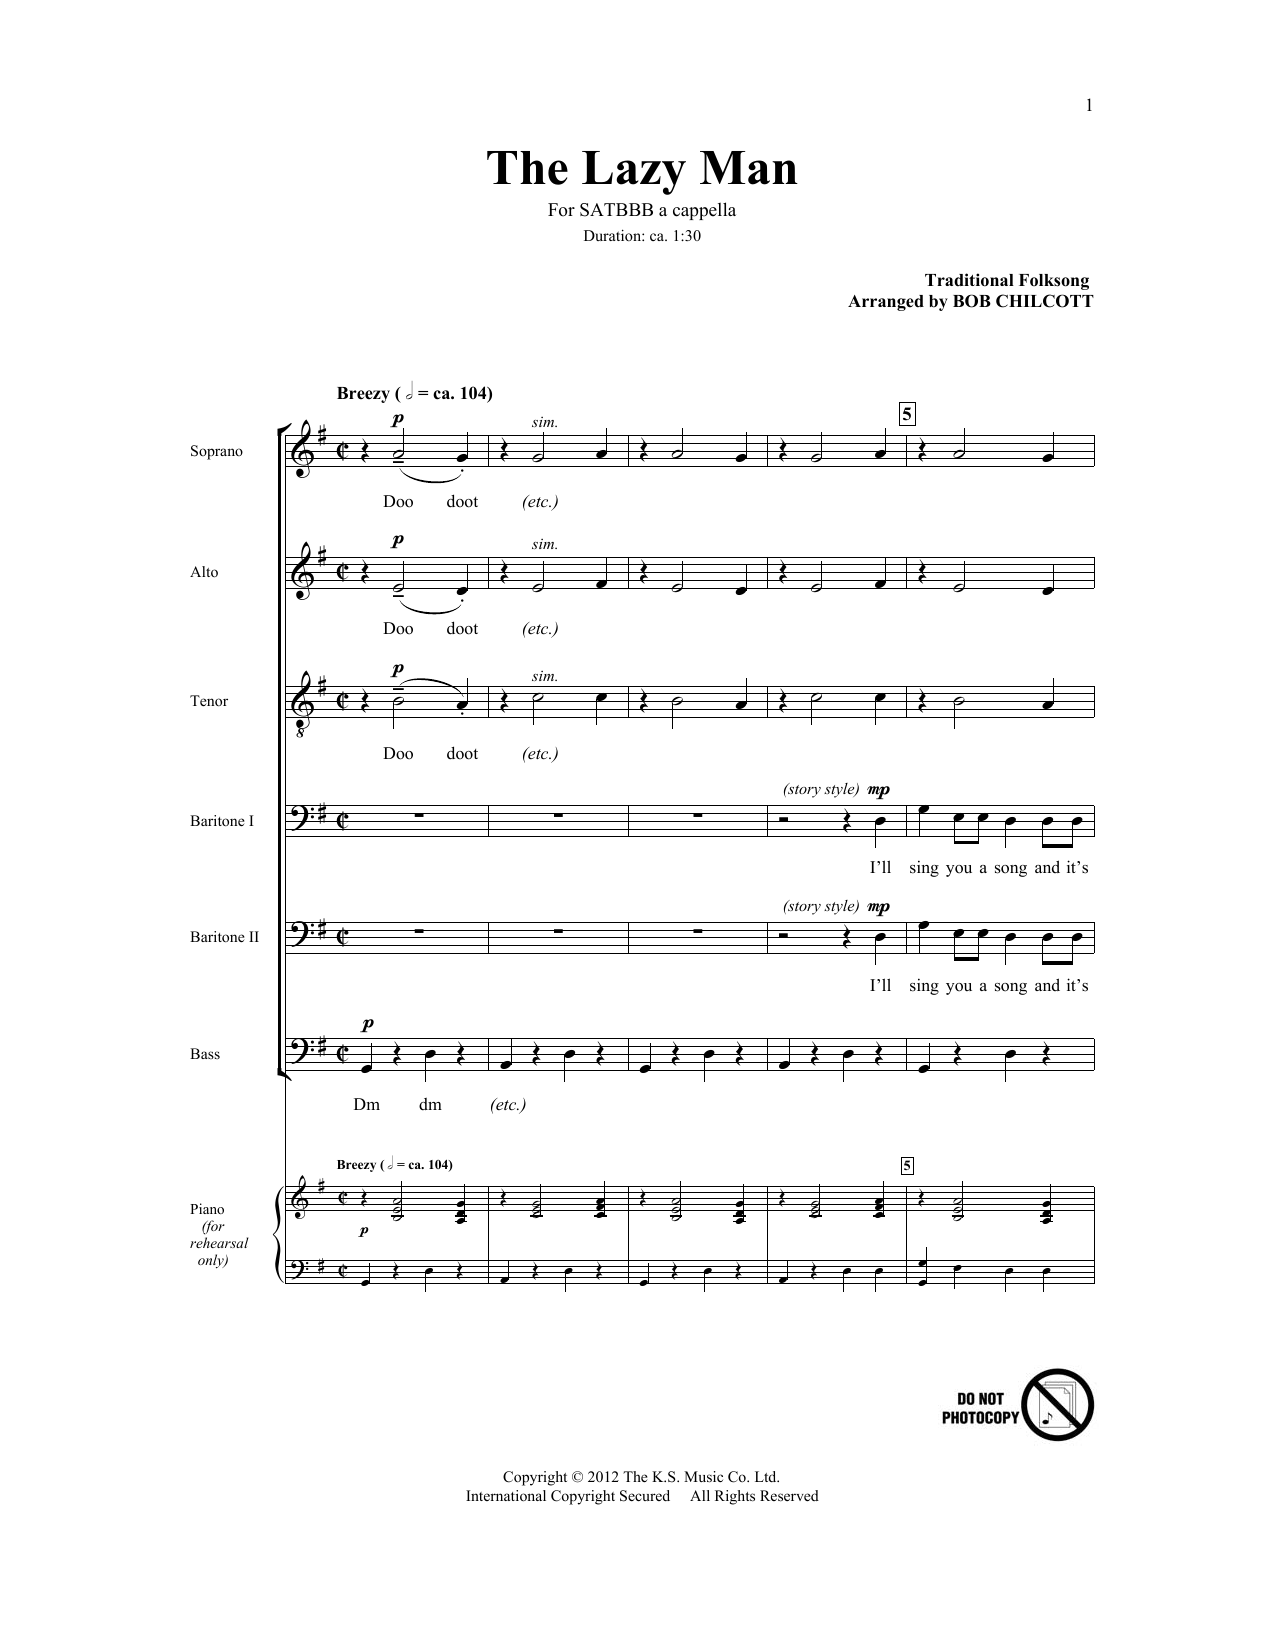 Bob Chilcott The Lazy Man Sheet Music Notes & Chords for SATB - Download or Print PDF